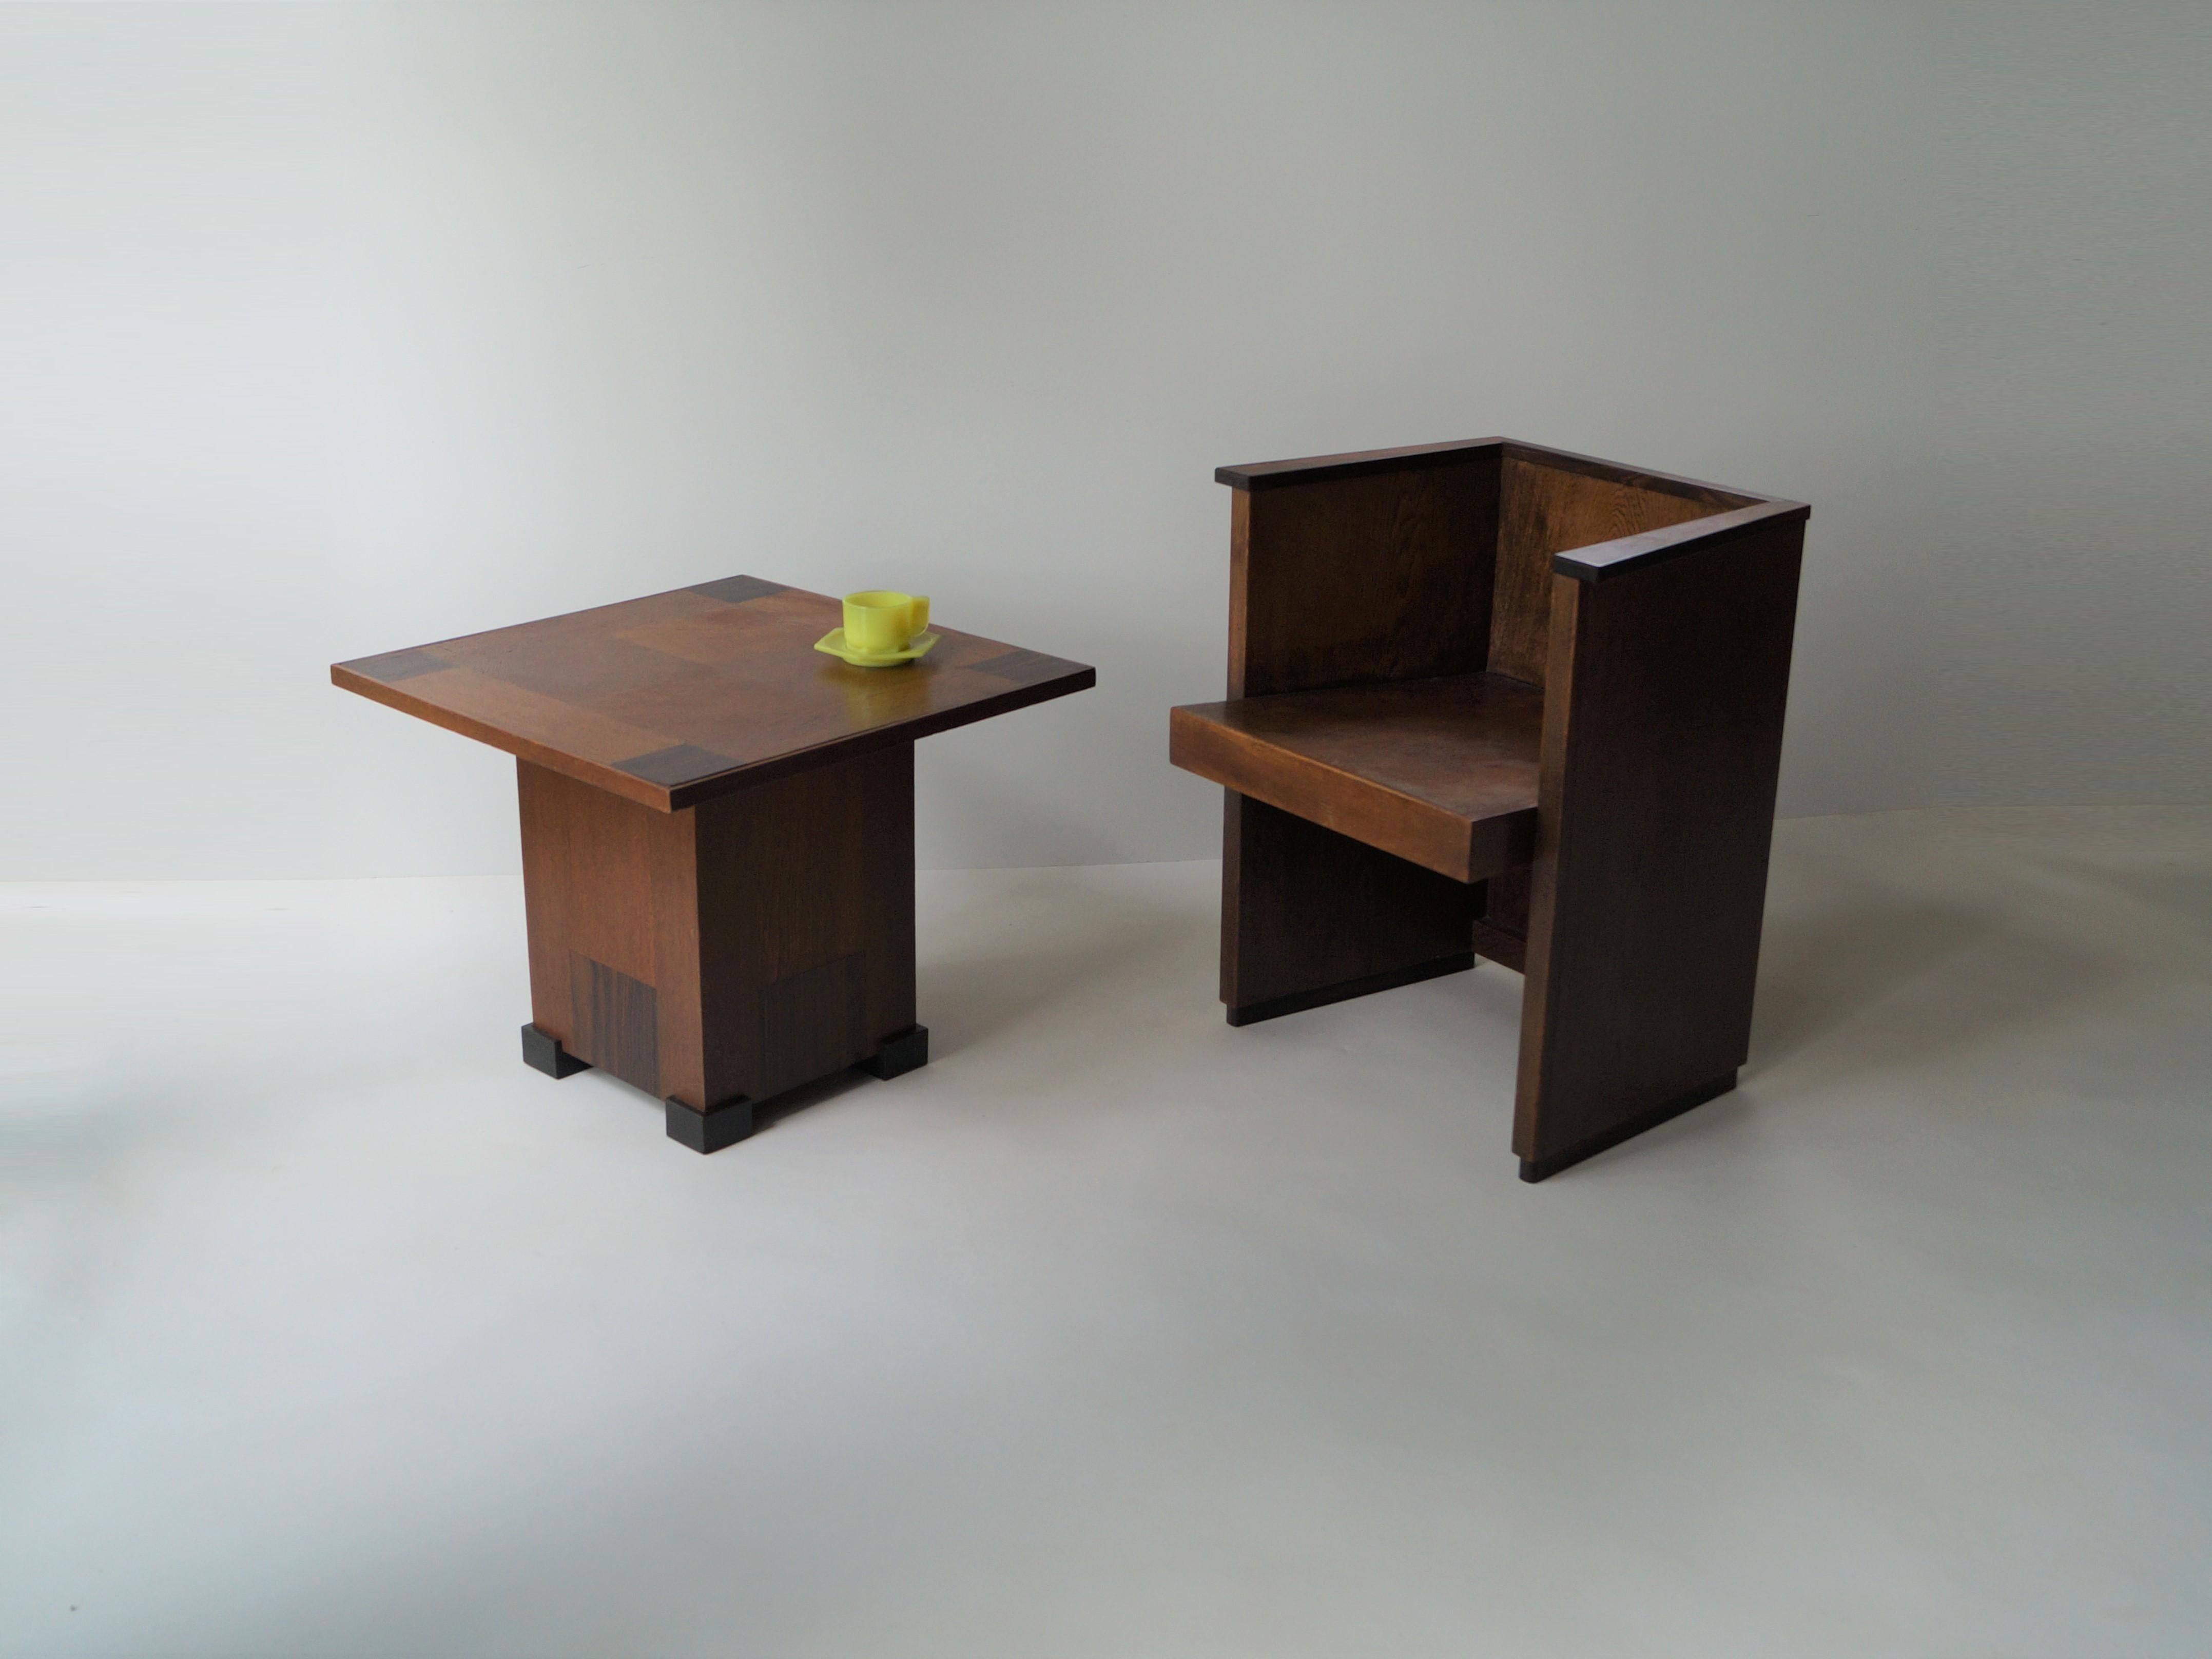 Dutch Art Deco Modernist coffee table in style of P.E.L. Izeren, 1920s For Sale 6